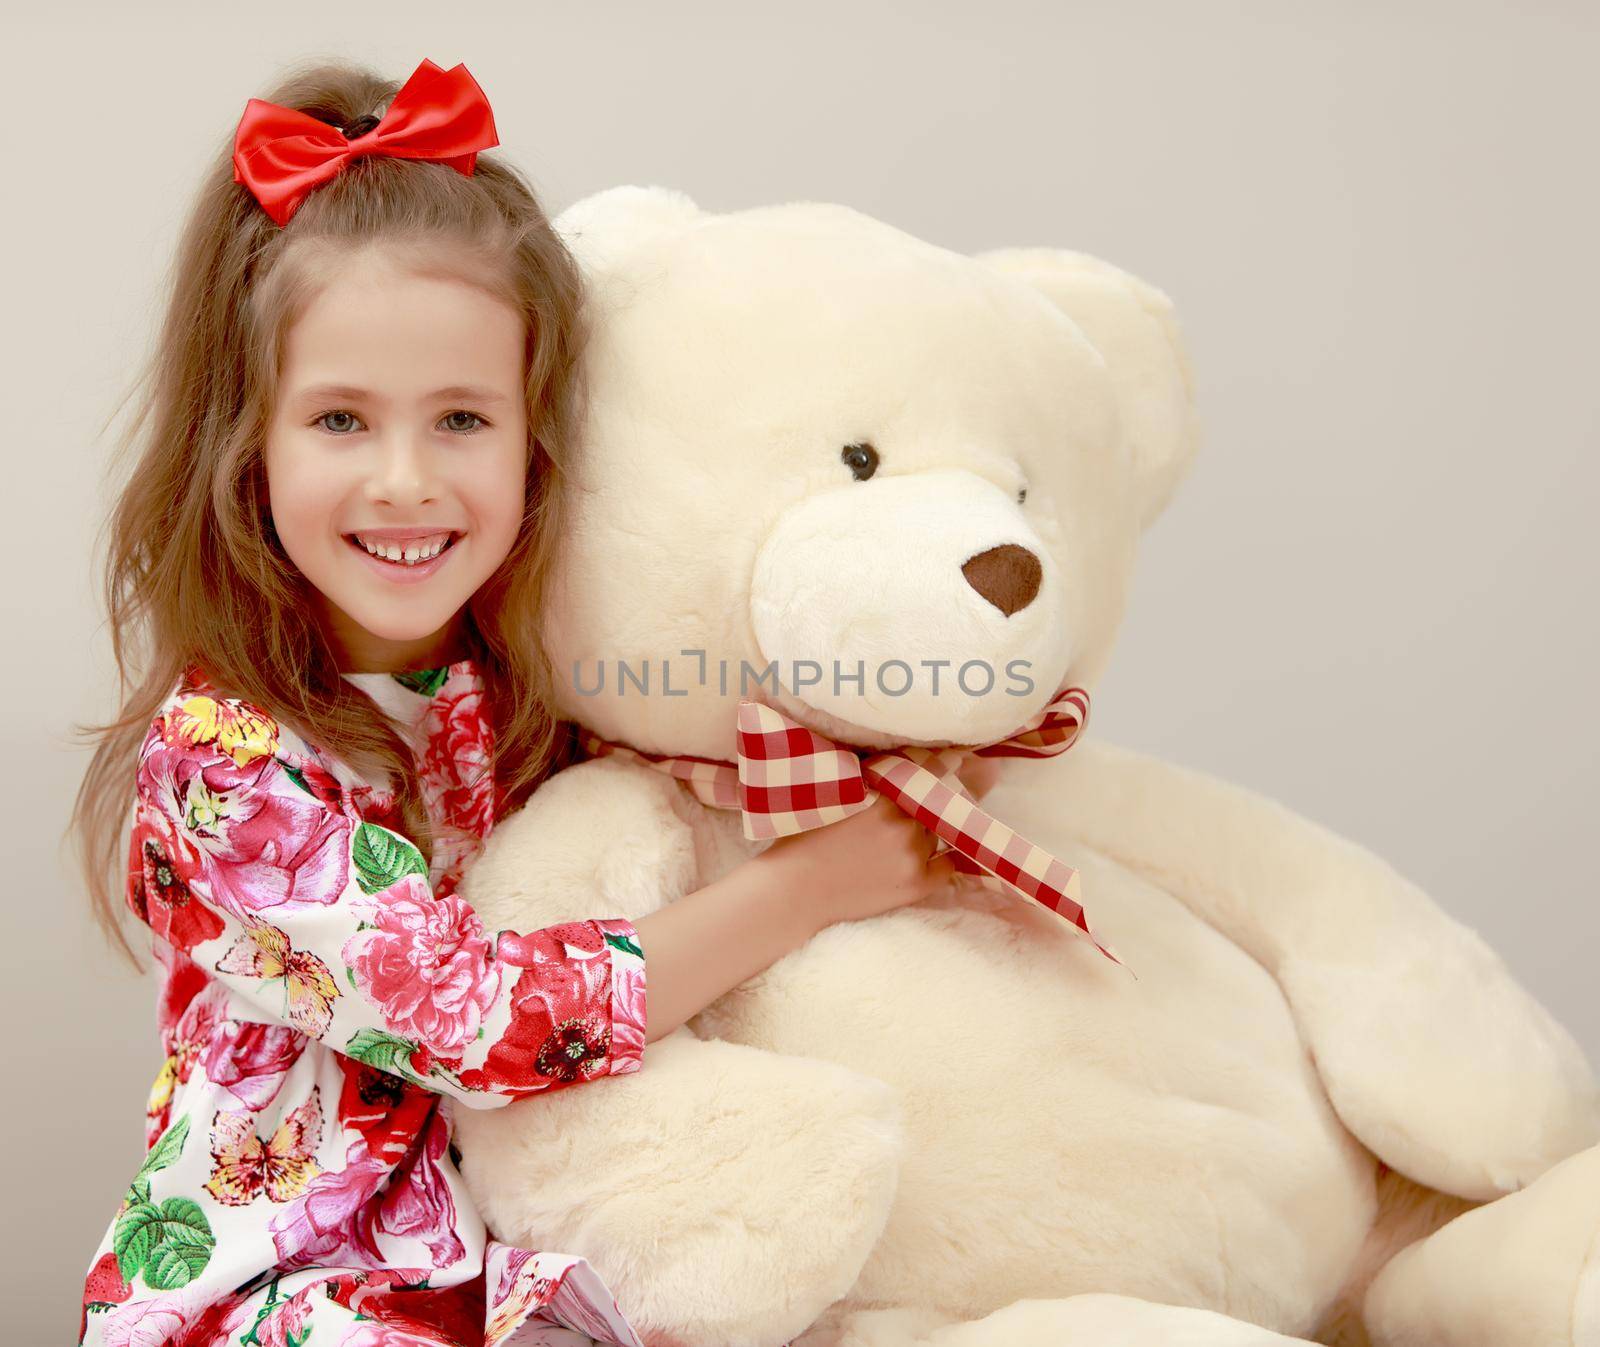 Girl with Teddy bear by kolesnikov_studio